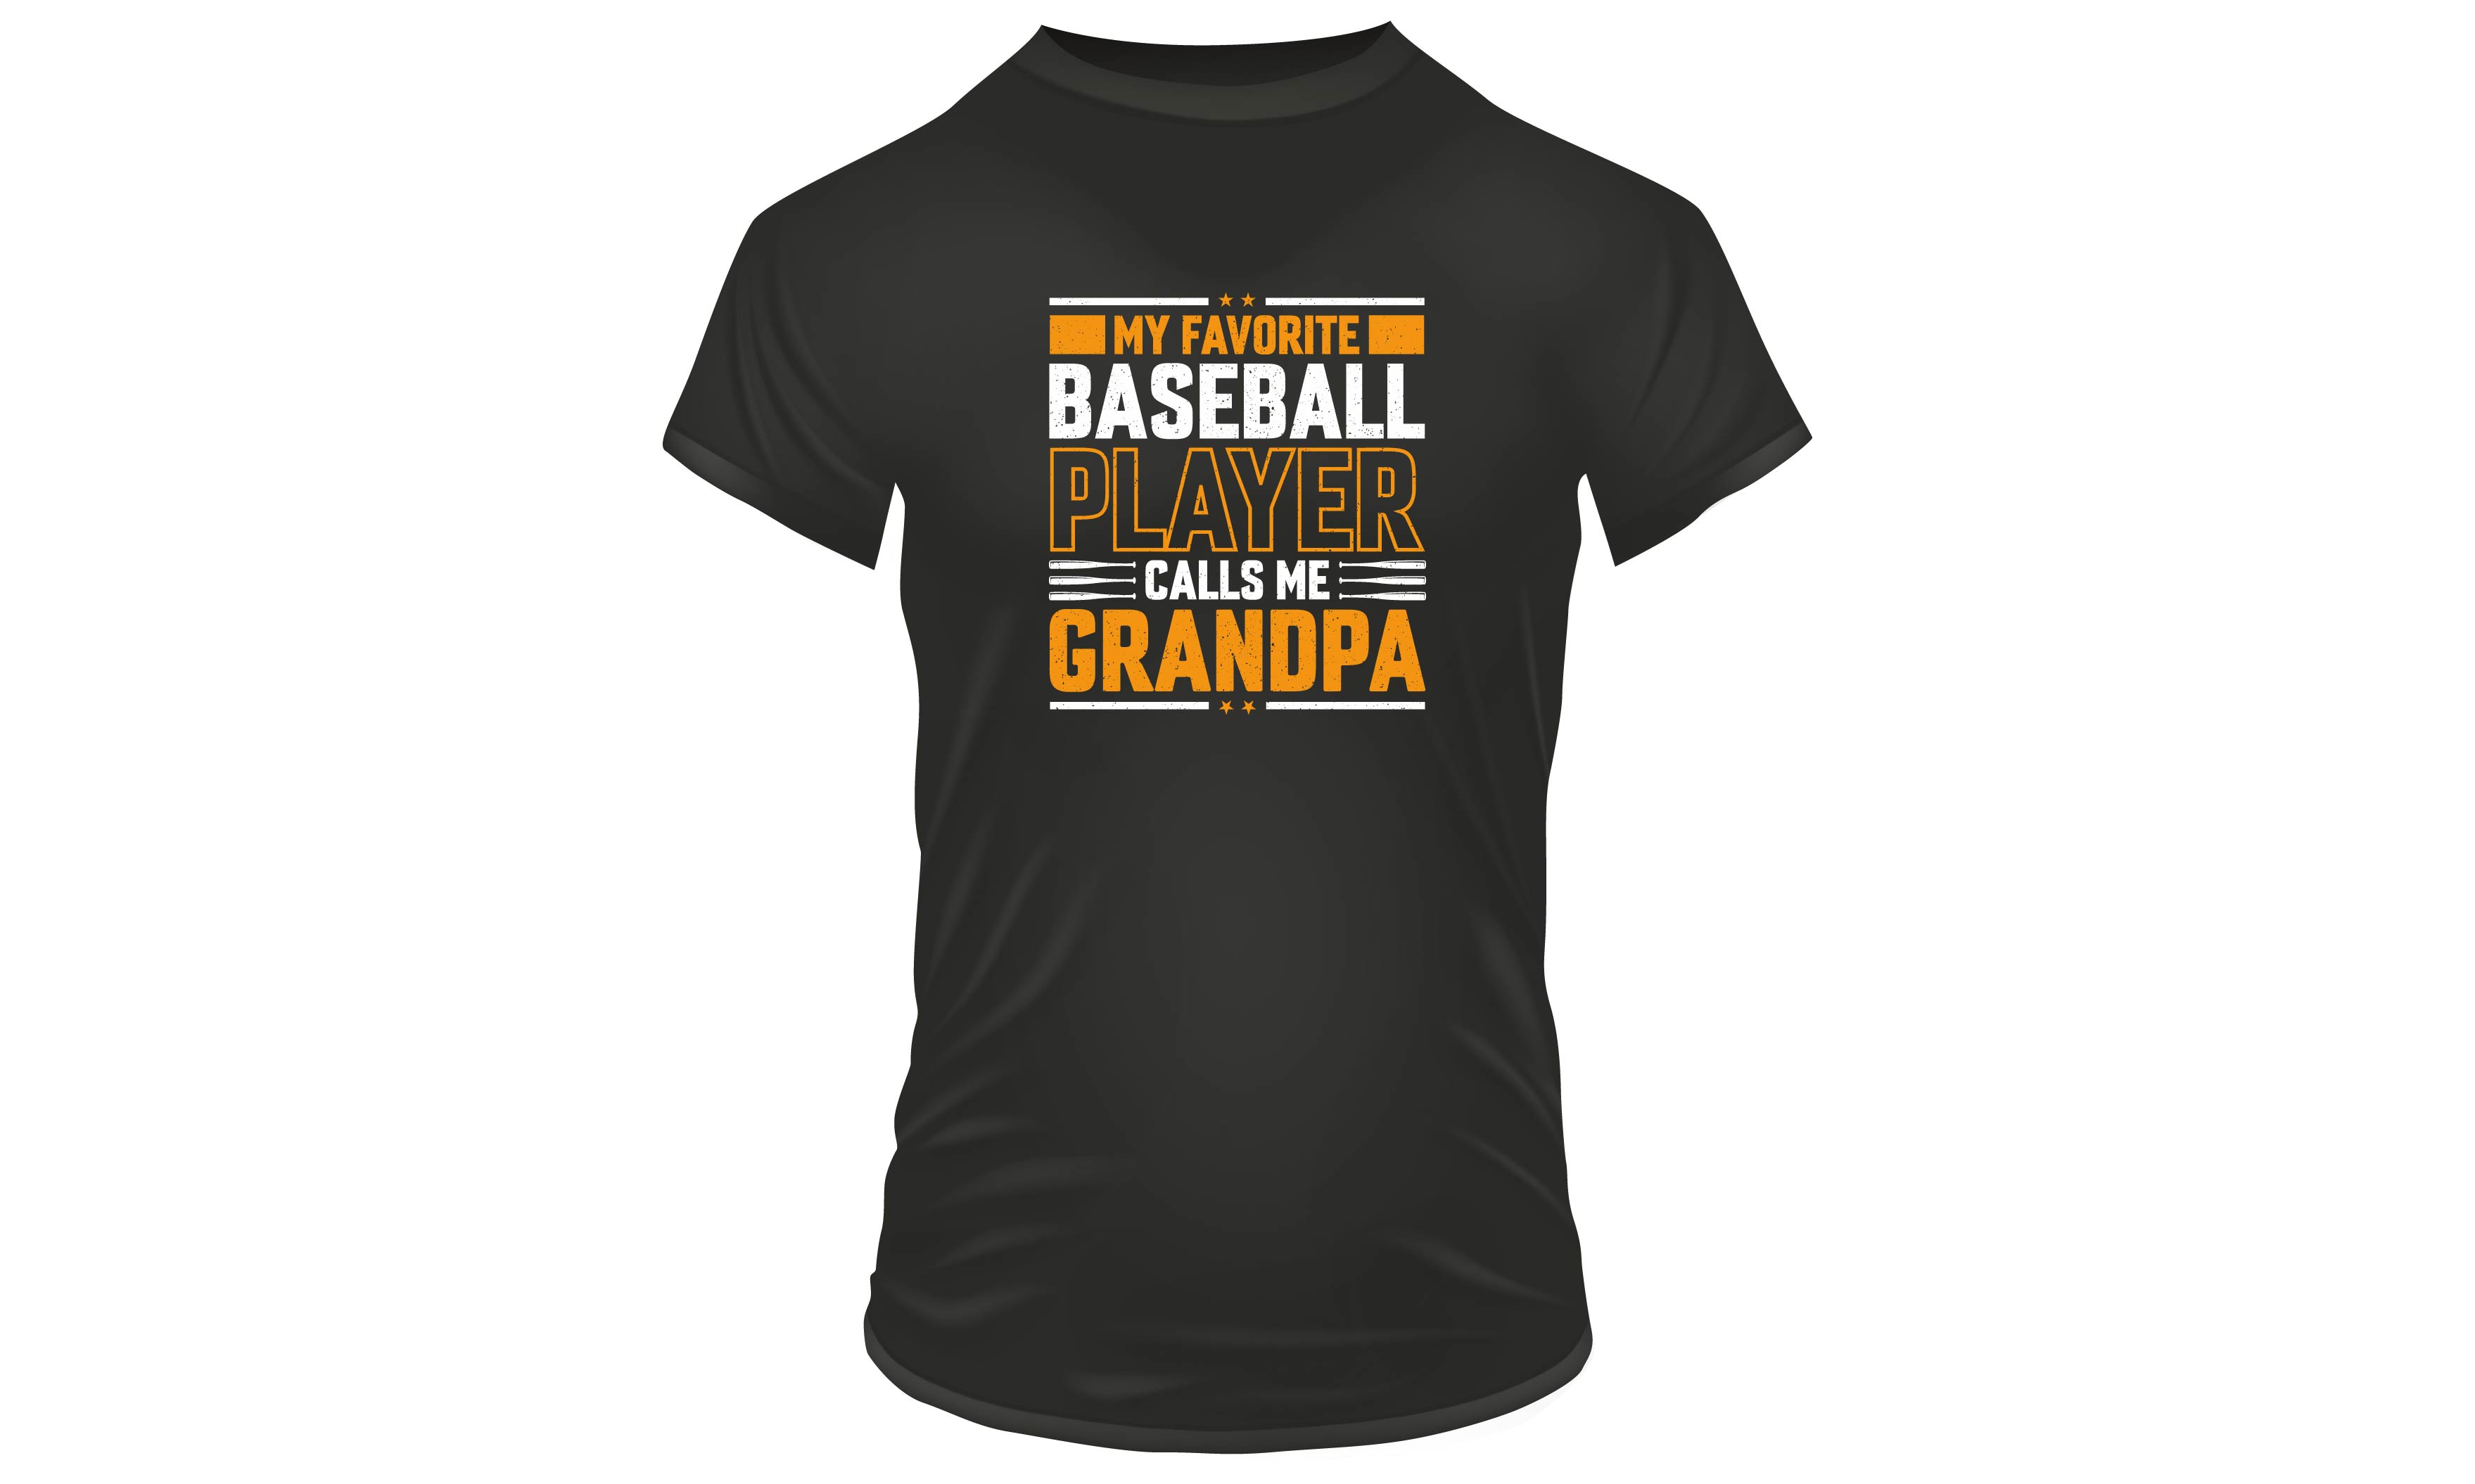 Black t - shirt that says my favorite baseball player is called grandpa.